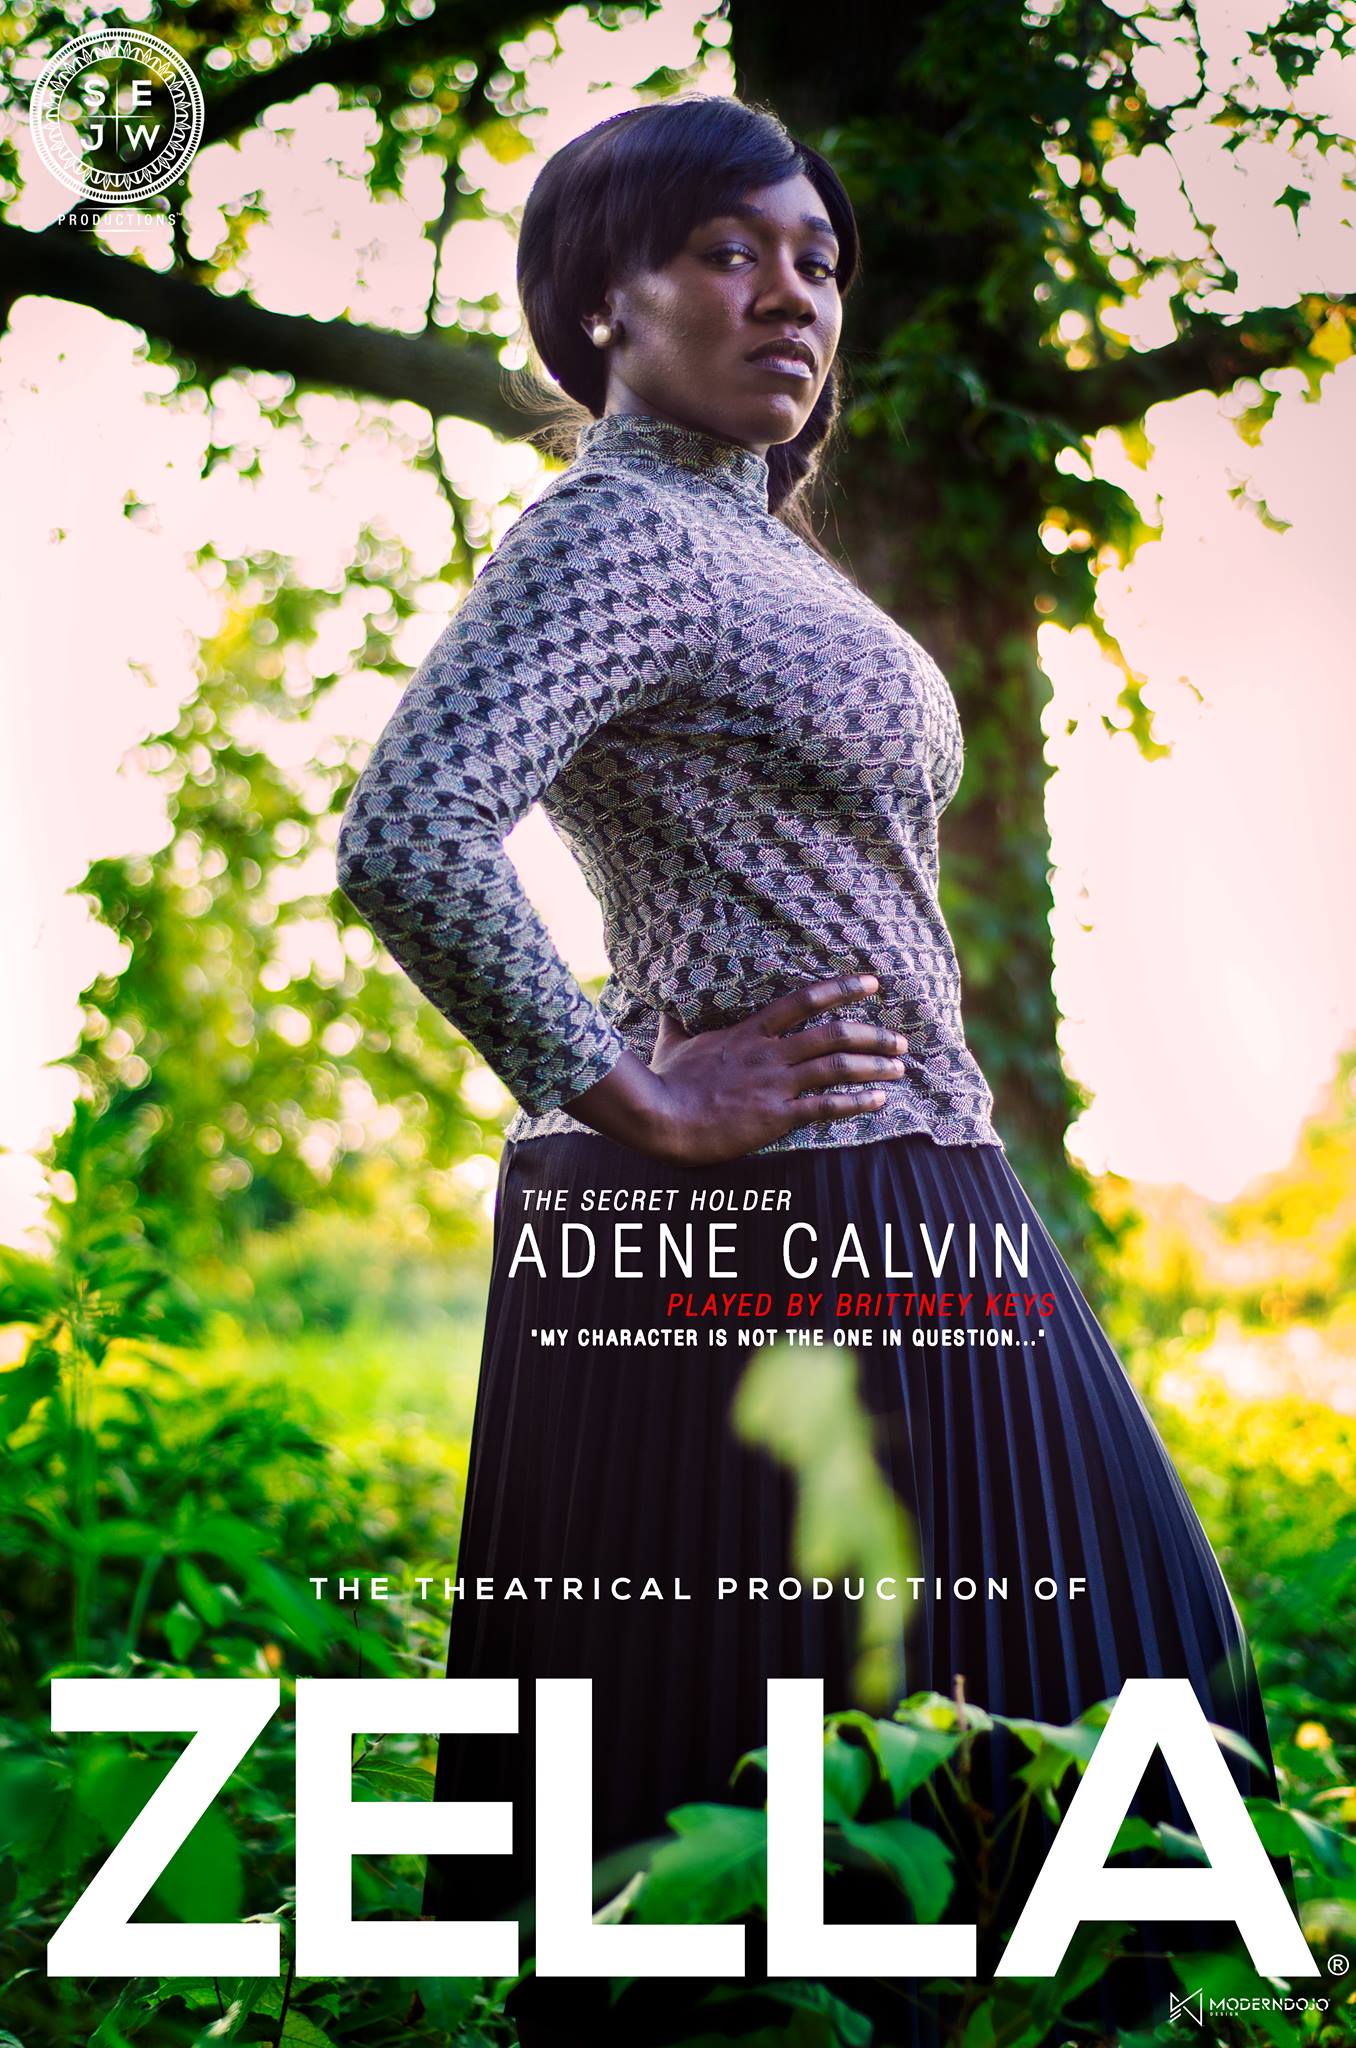 Adene Calvin Portrayed by Bree Keys